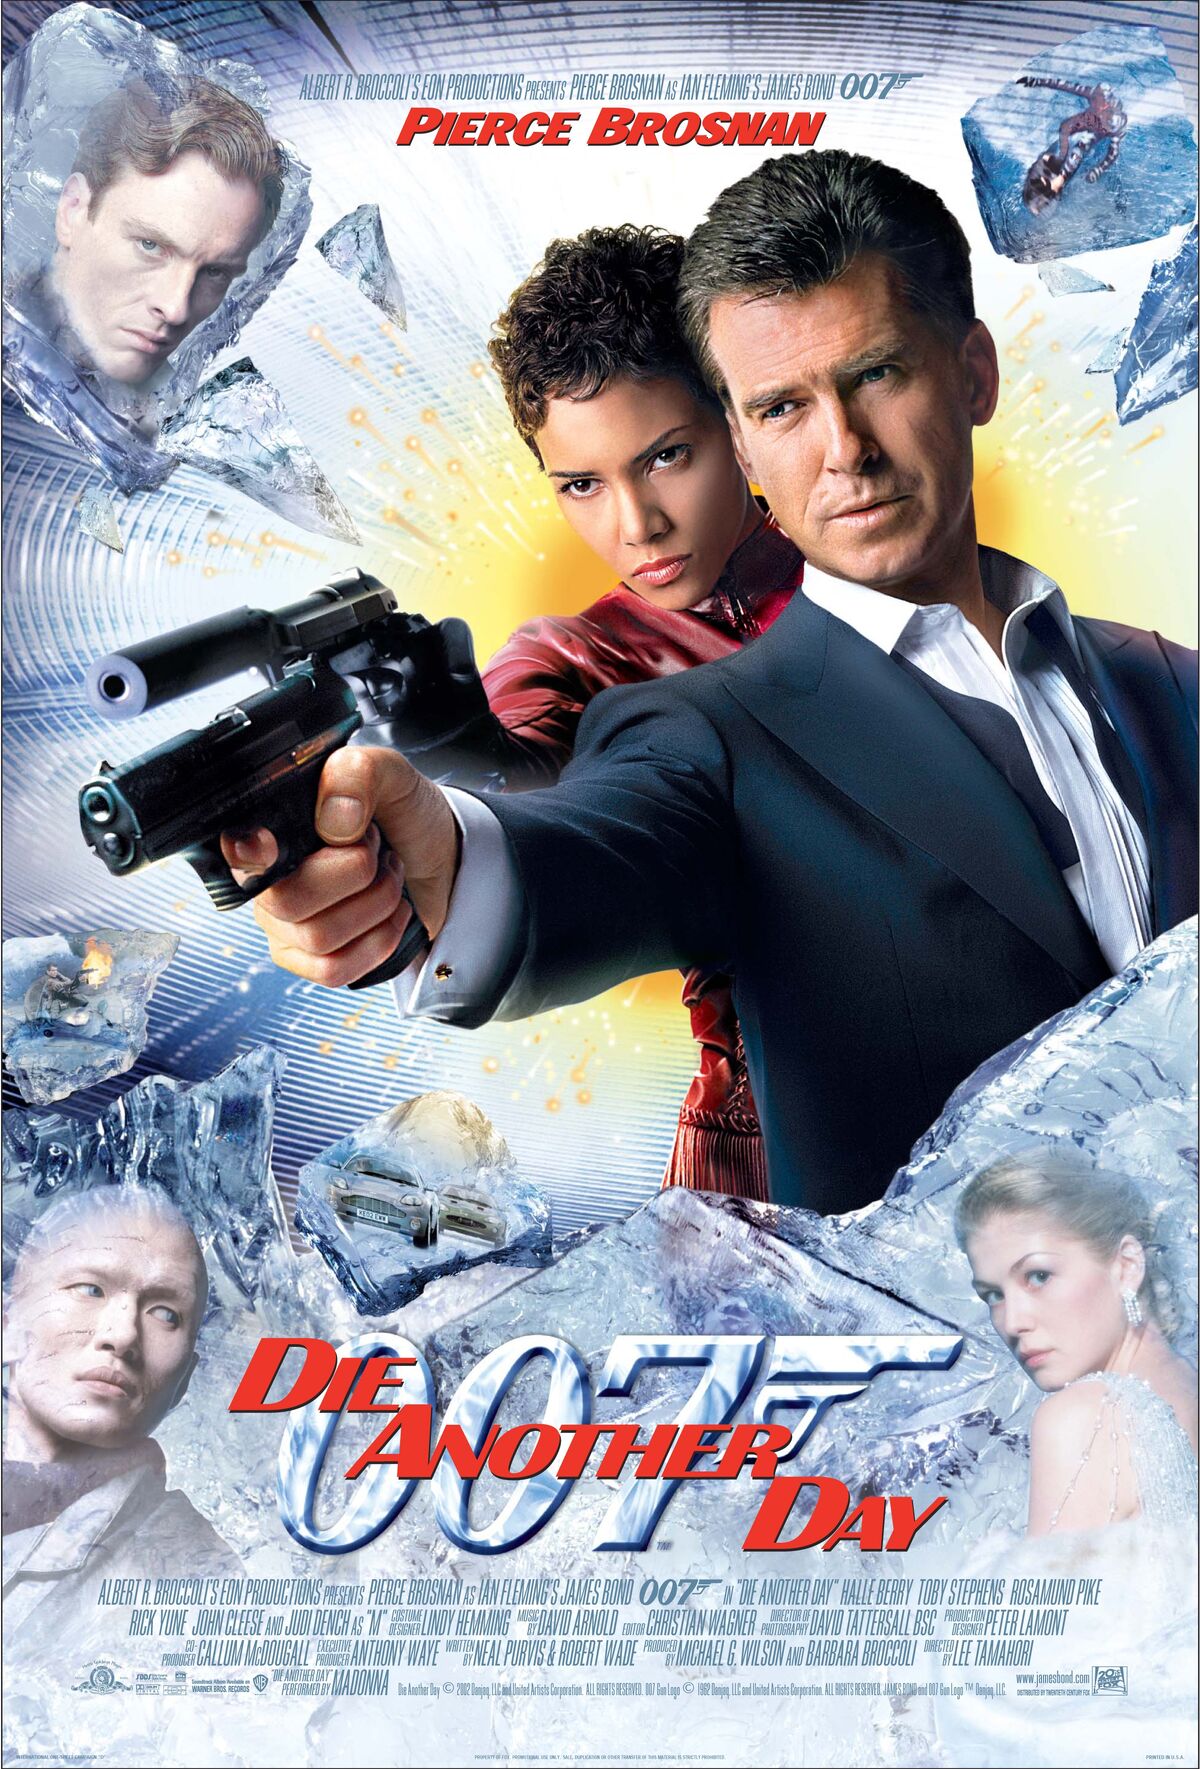 GoldenEye 007 (Video Game 1997) - IMDb